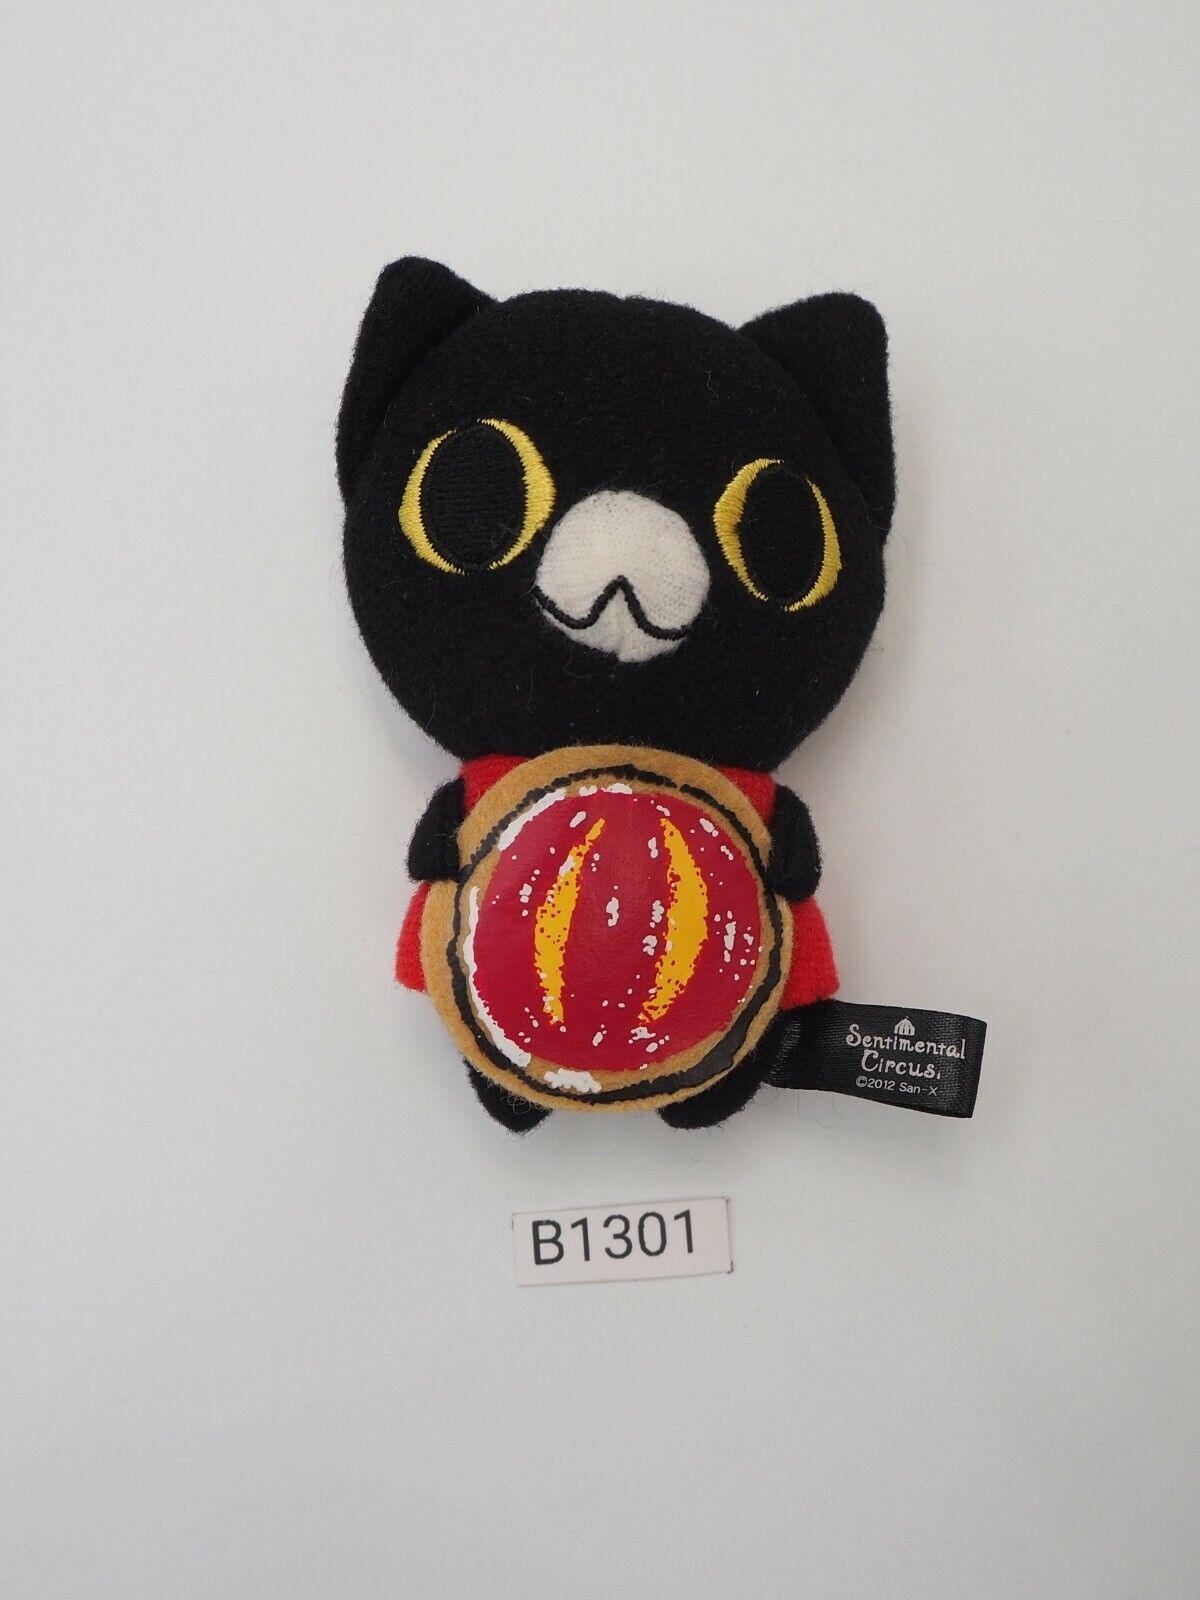 Sentimental circus B1301 Kuro Cat San-x Keychain mascot 3.5\